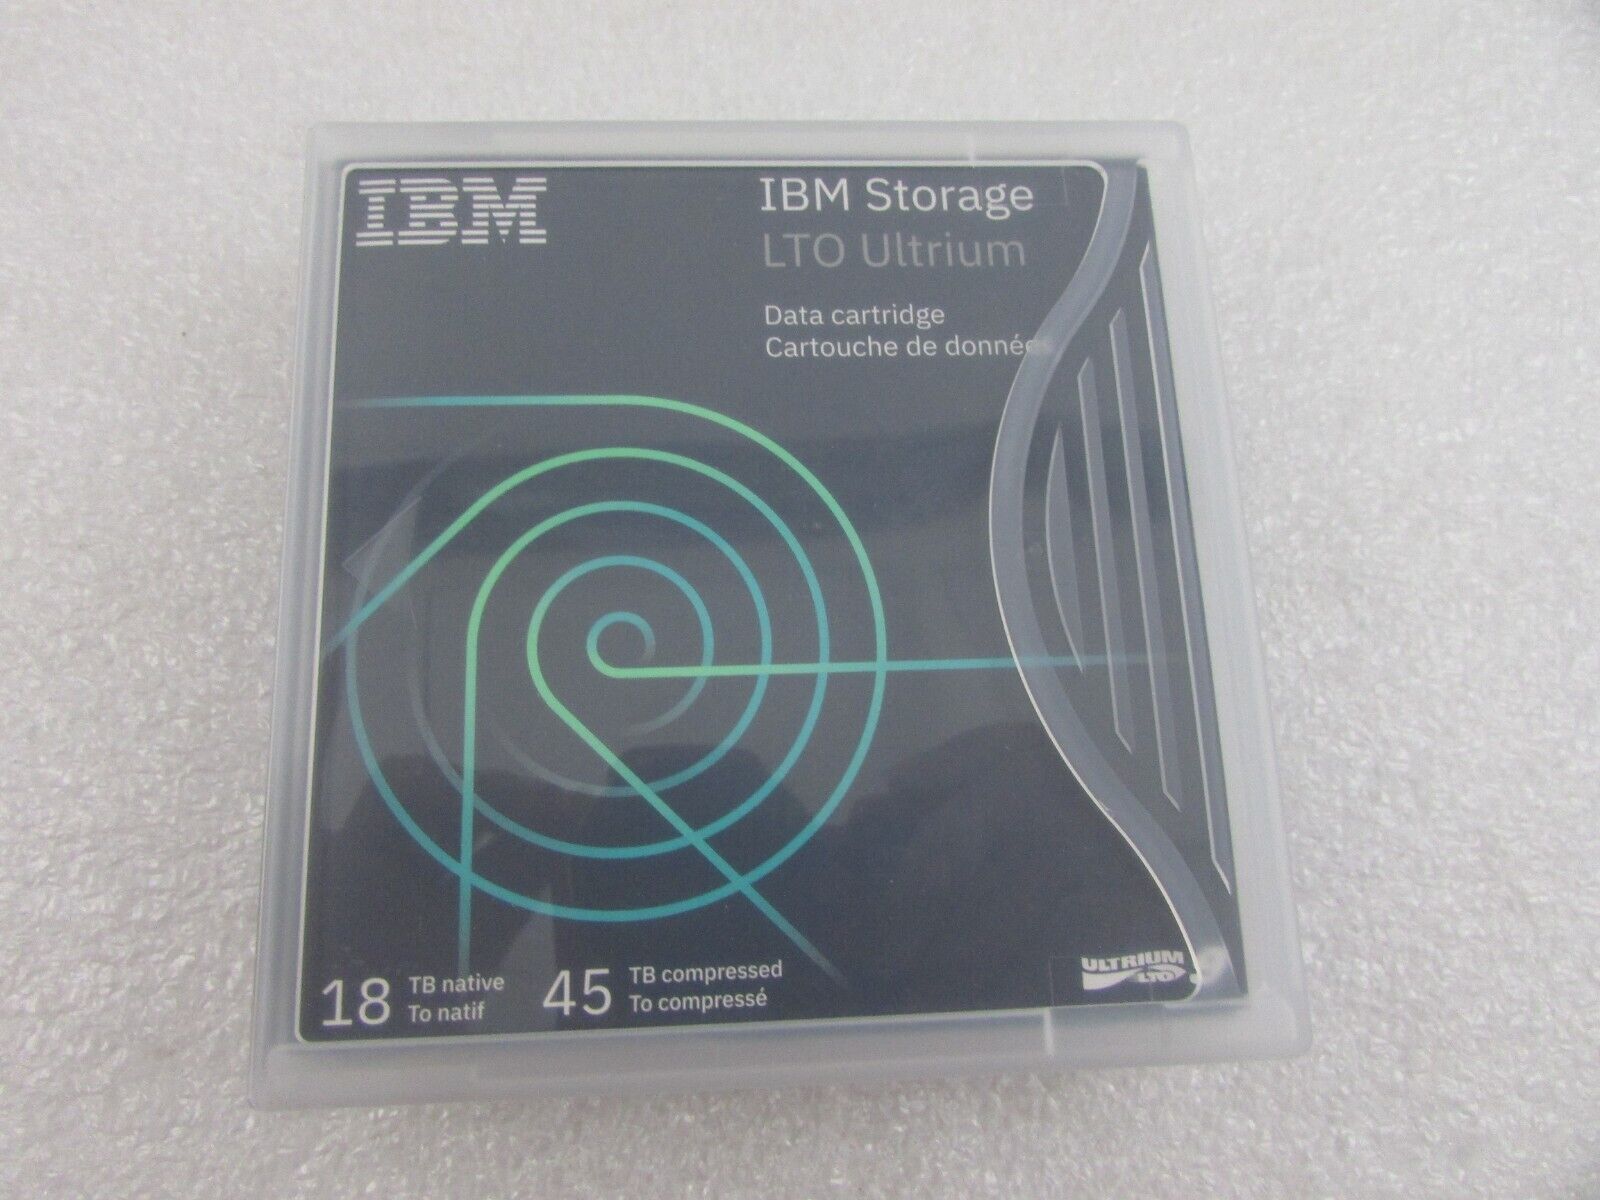 NEW IBM LTO Ultrium 9 Data Cartridge 18tb Native/45tb Compressed 02xw568